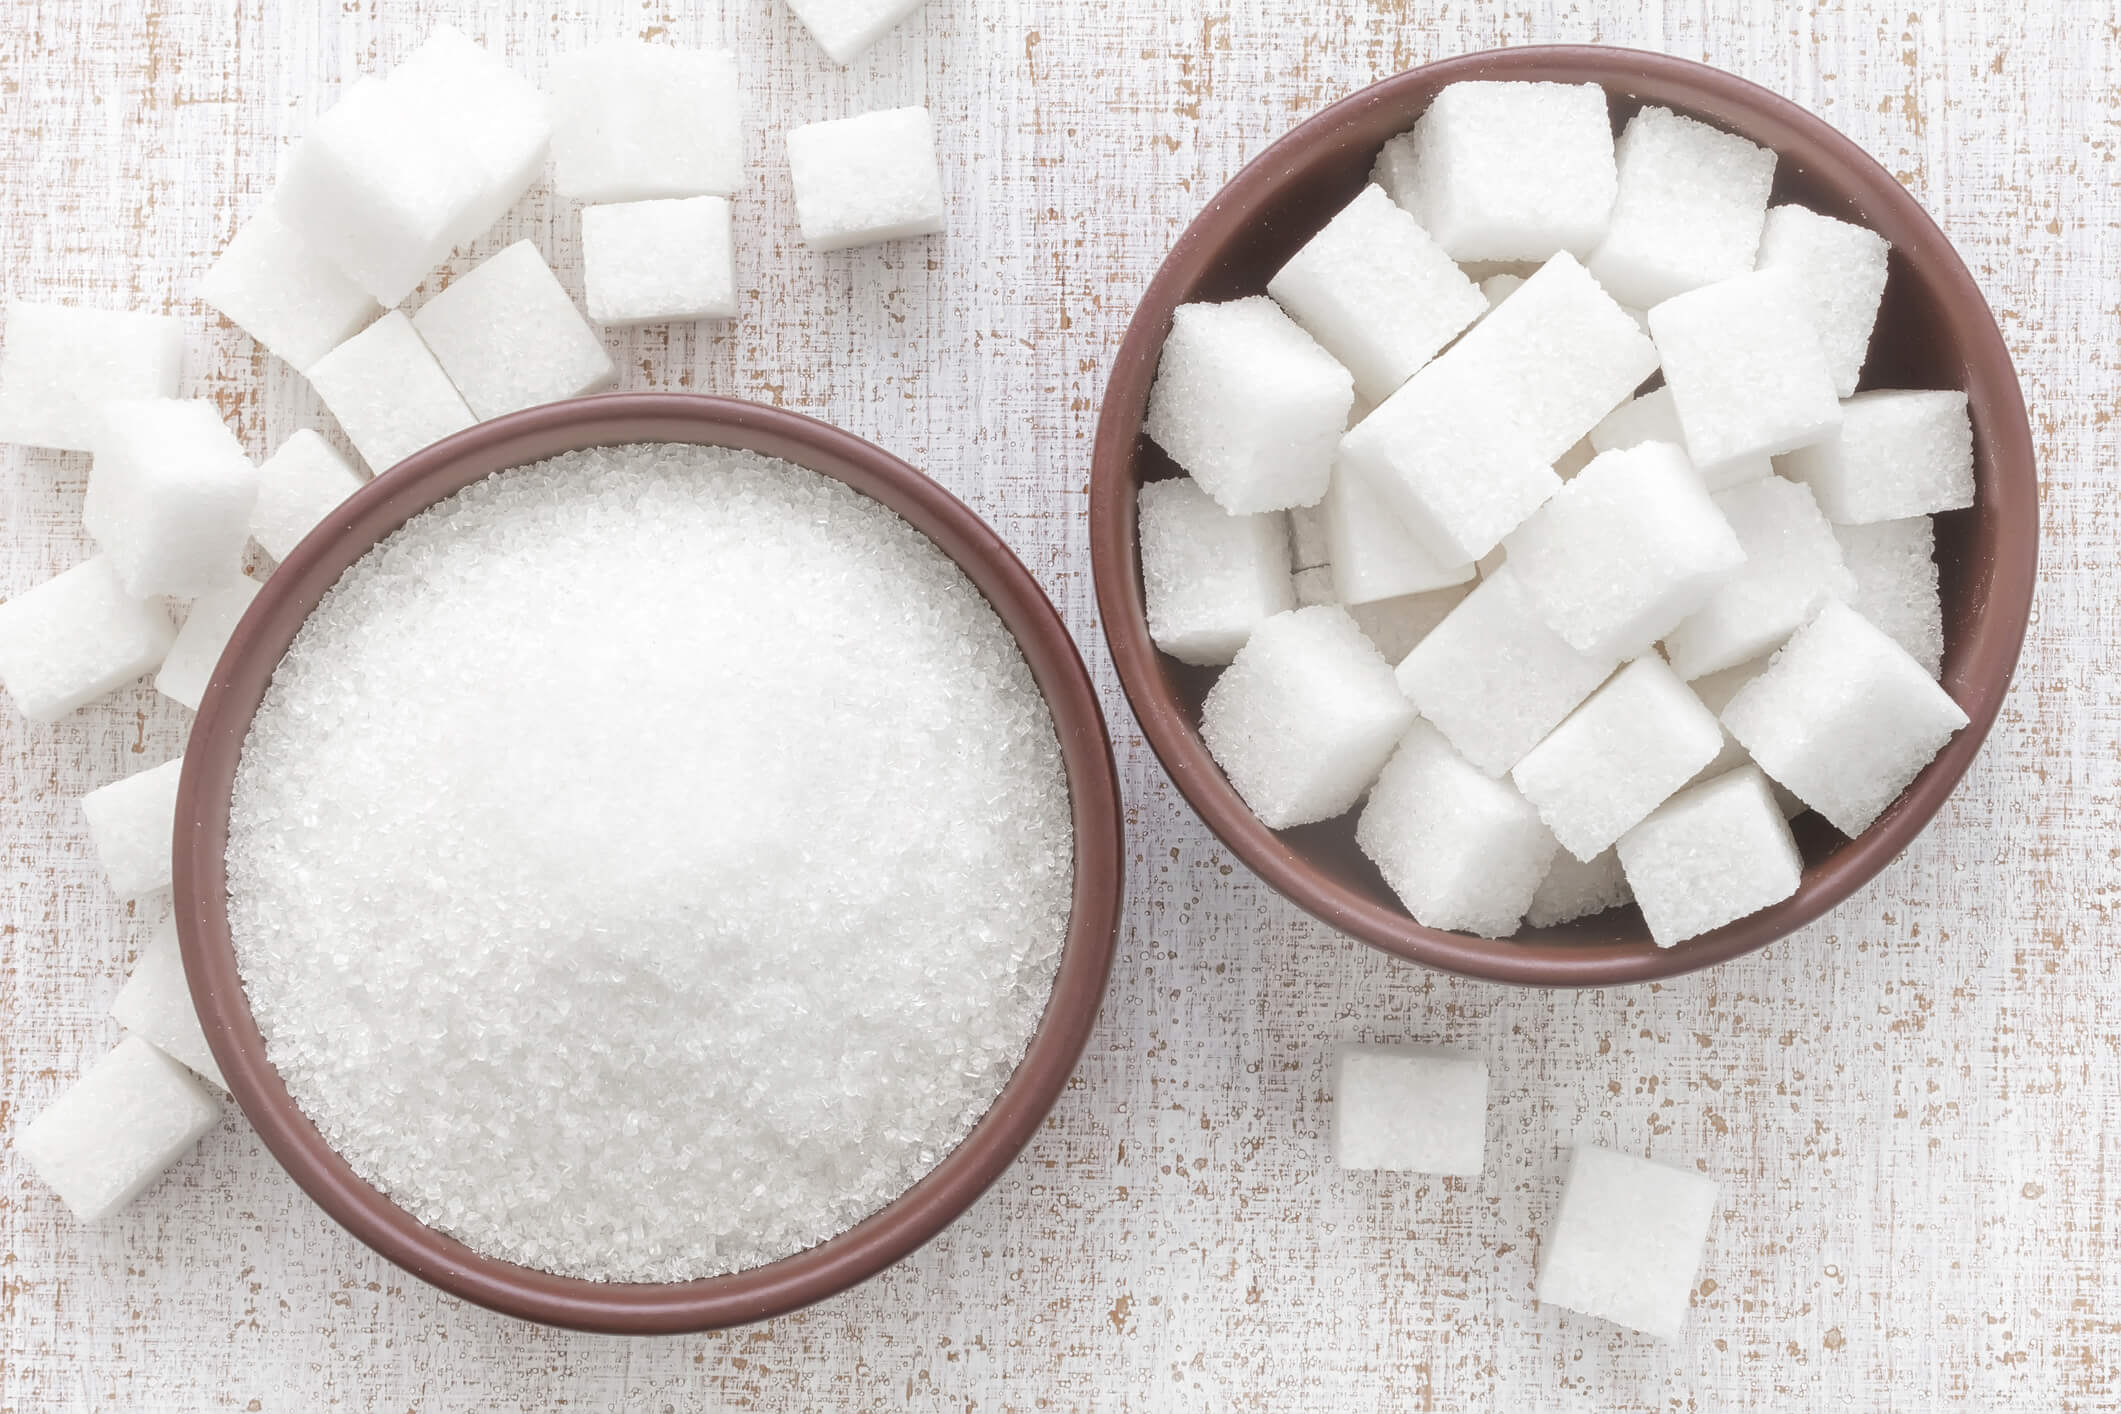 sugar consumption during fasting